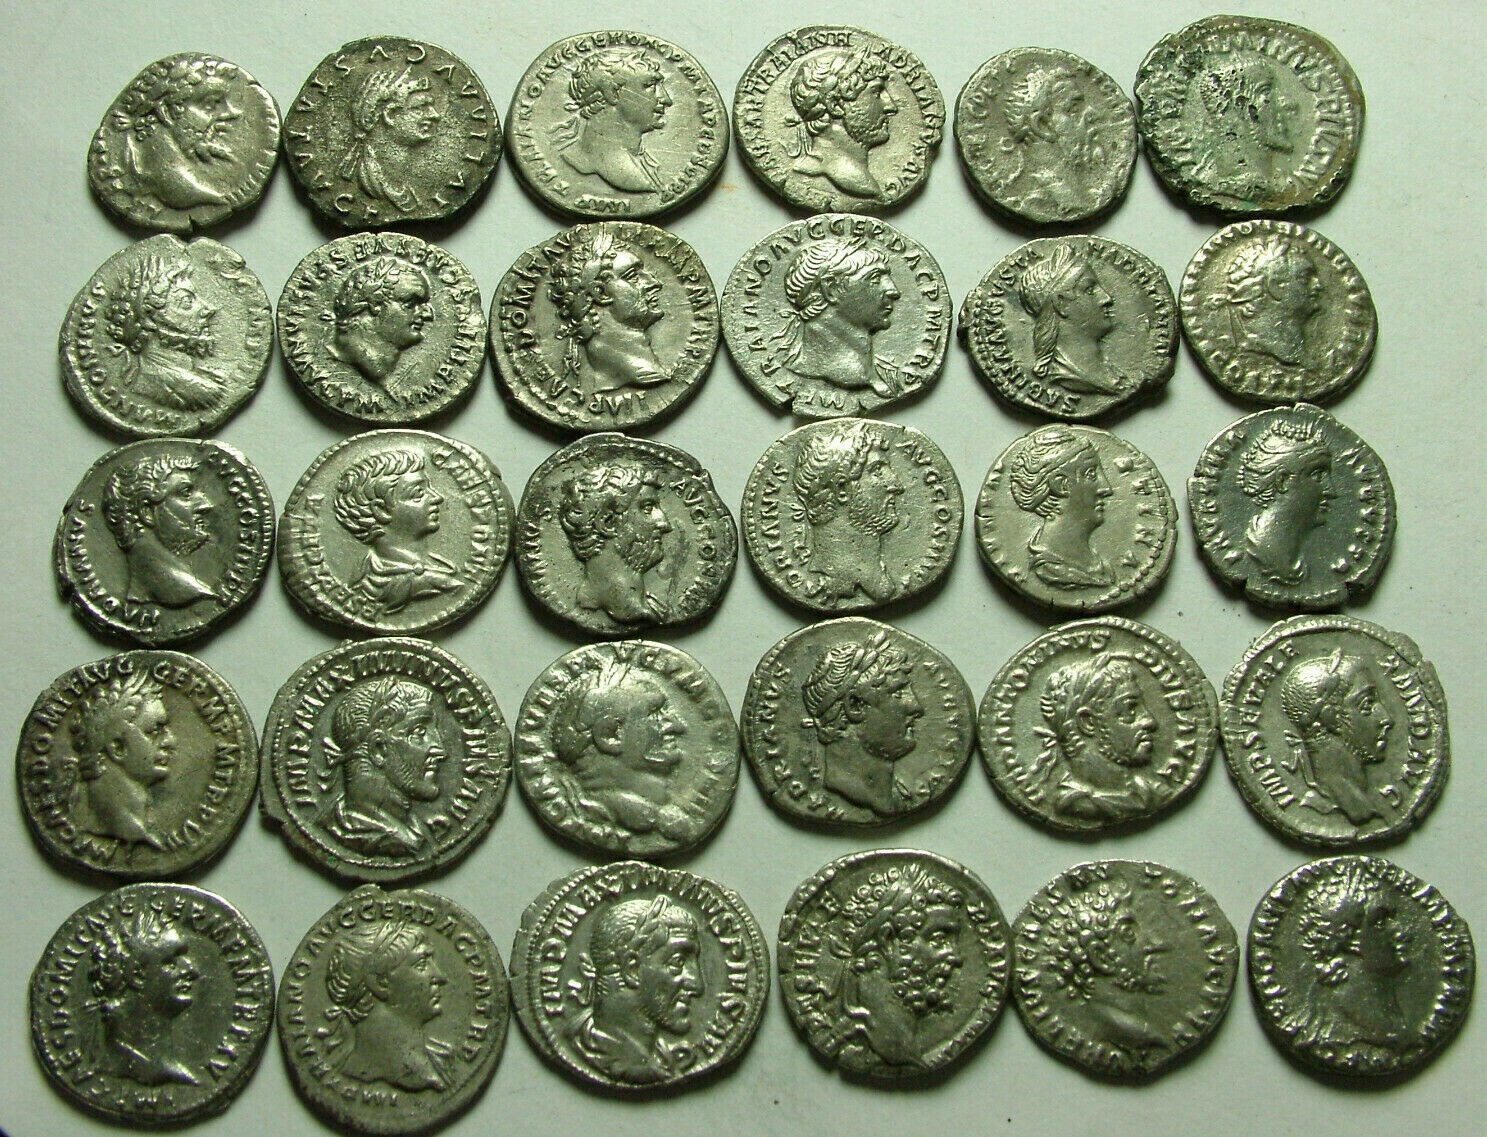 1 original Ancient Roman SILVER coin Denarius Trajan Faustina Hadrian Domitian Без бренда - фотография #4